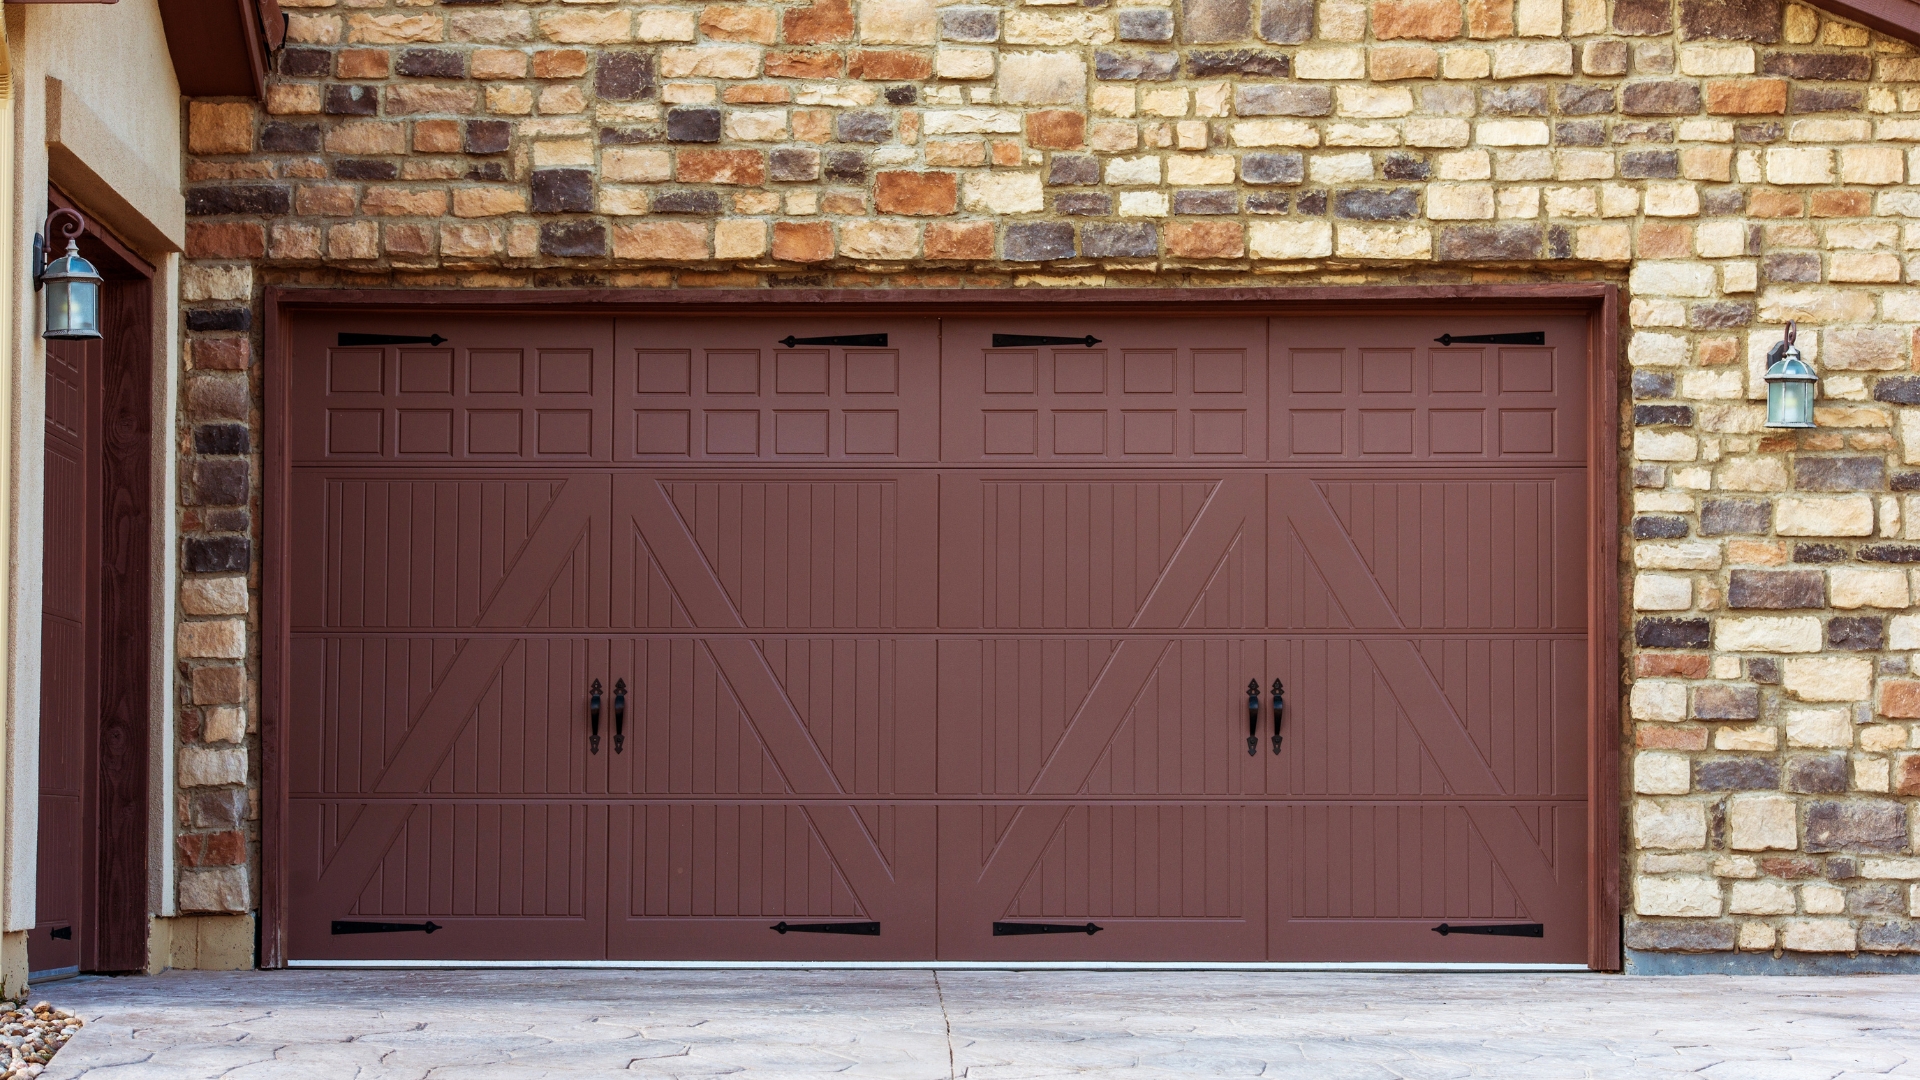 A custom garage door with decorative hardware